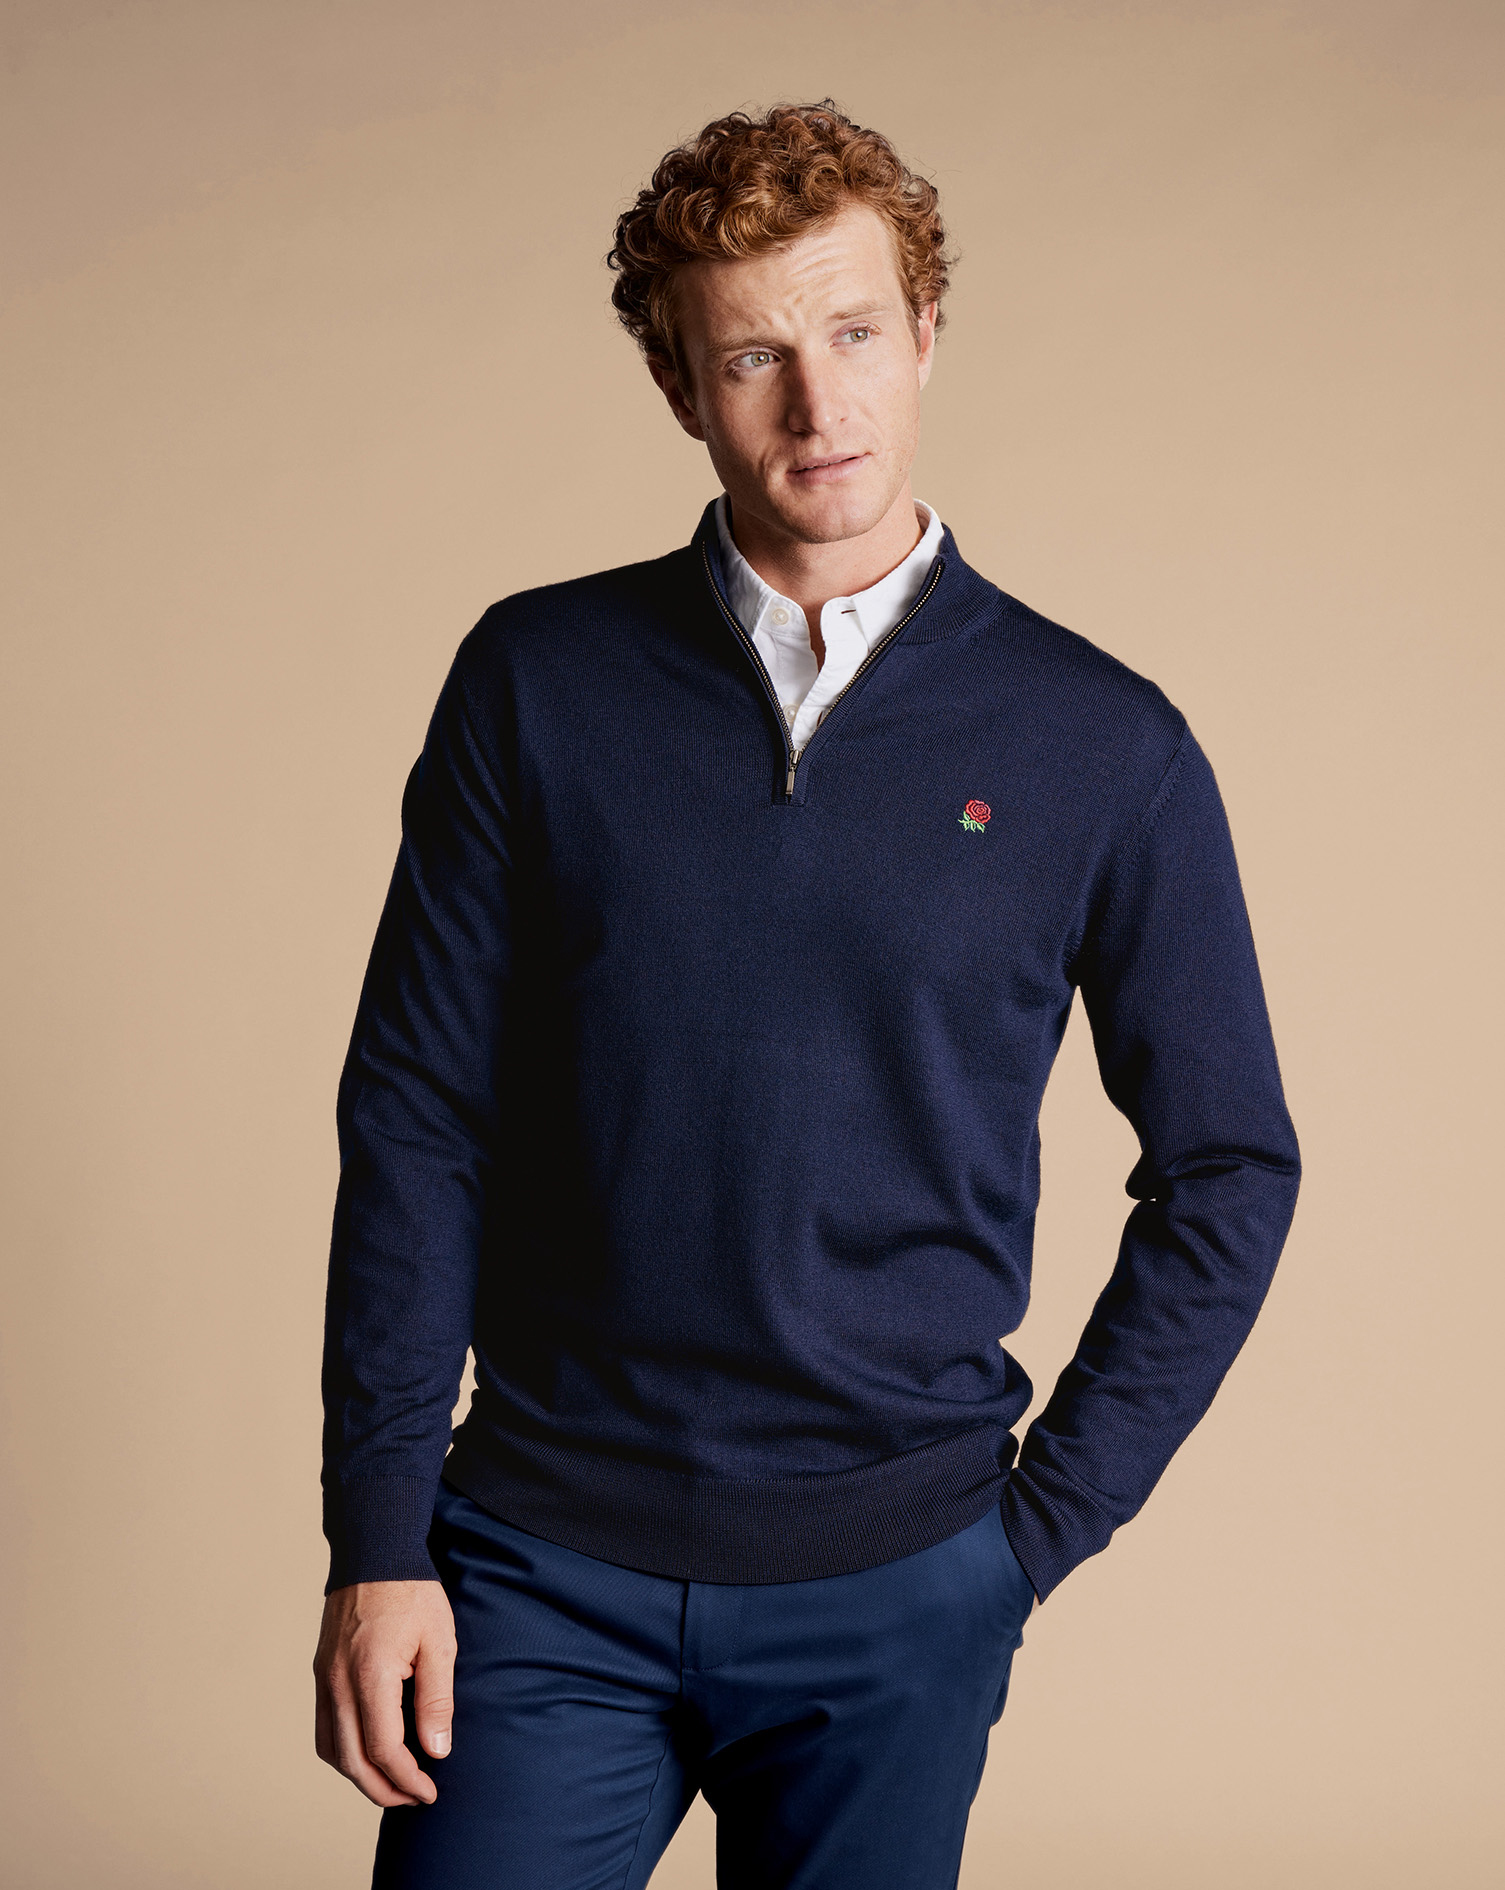 Men's Charles Tyrwhitt England Rugby Red Rose Zip Neck Sweater - Navy Blue Size Medium Merino
